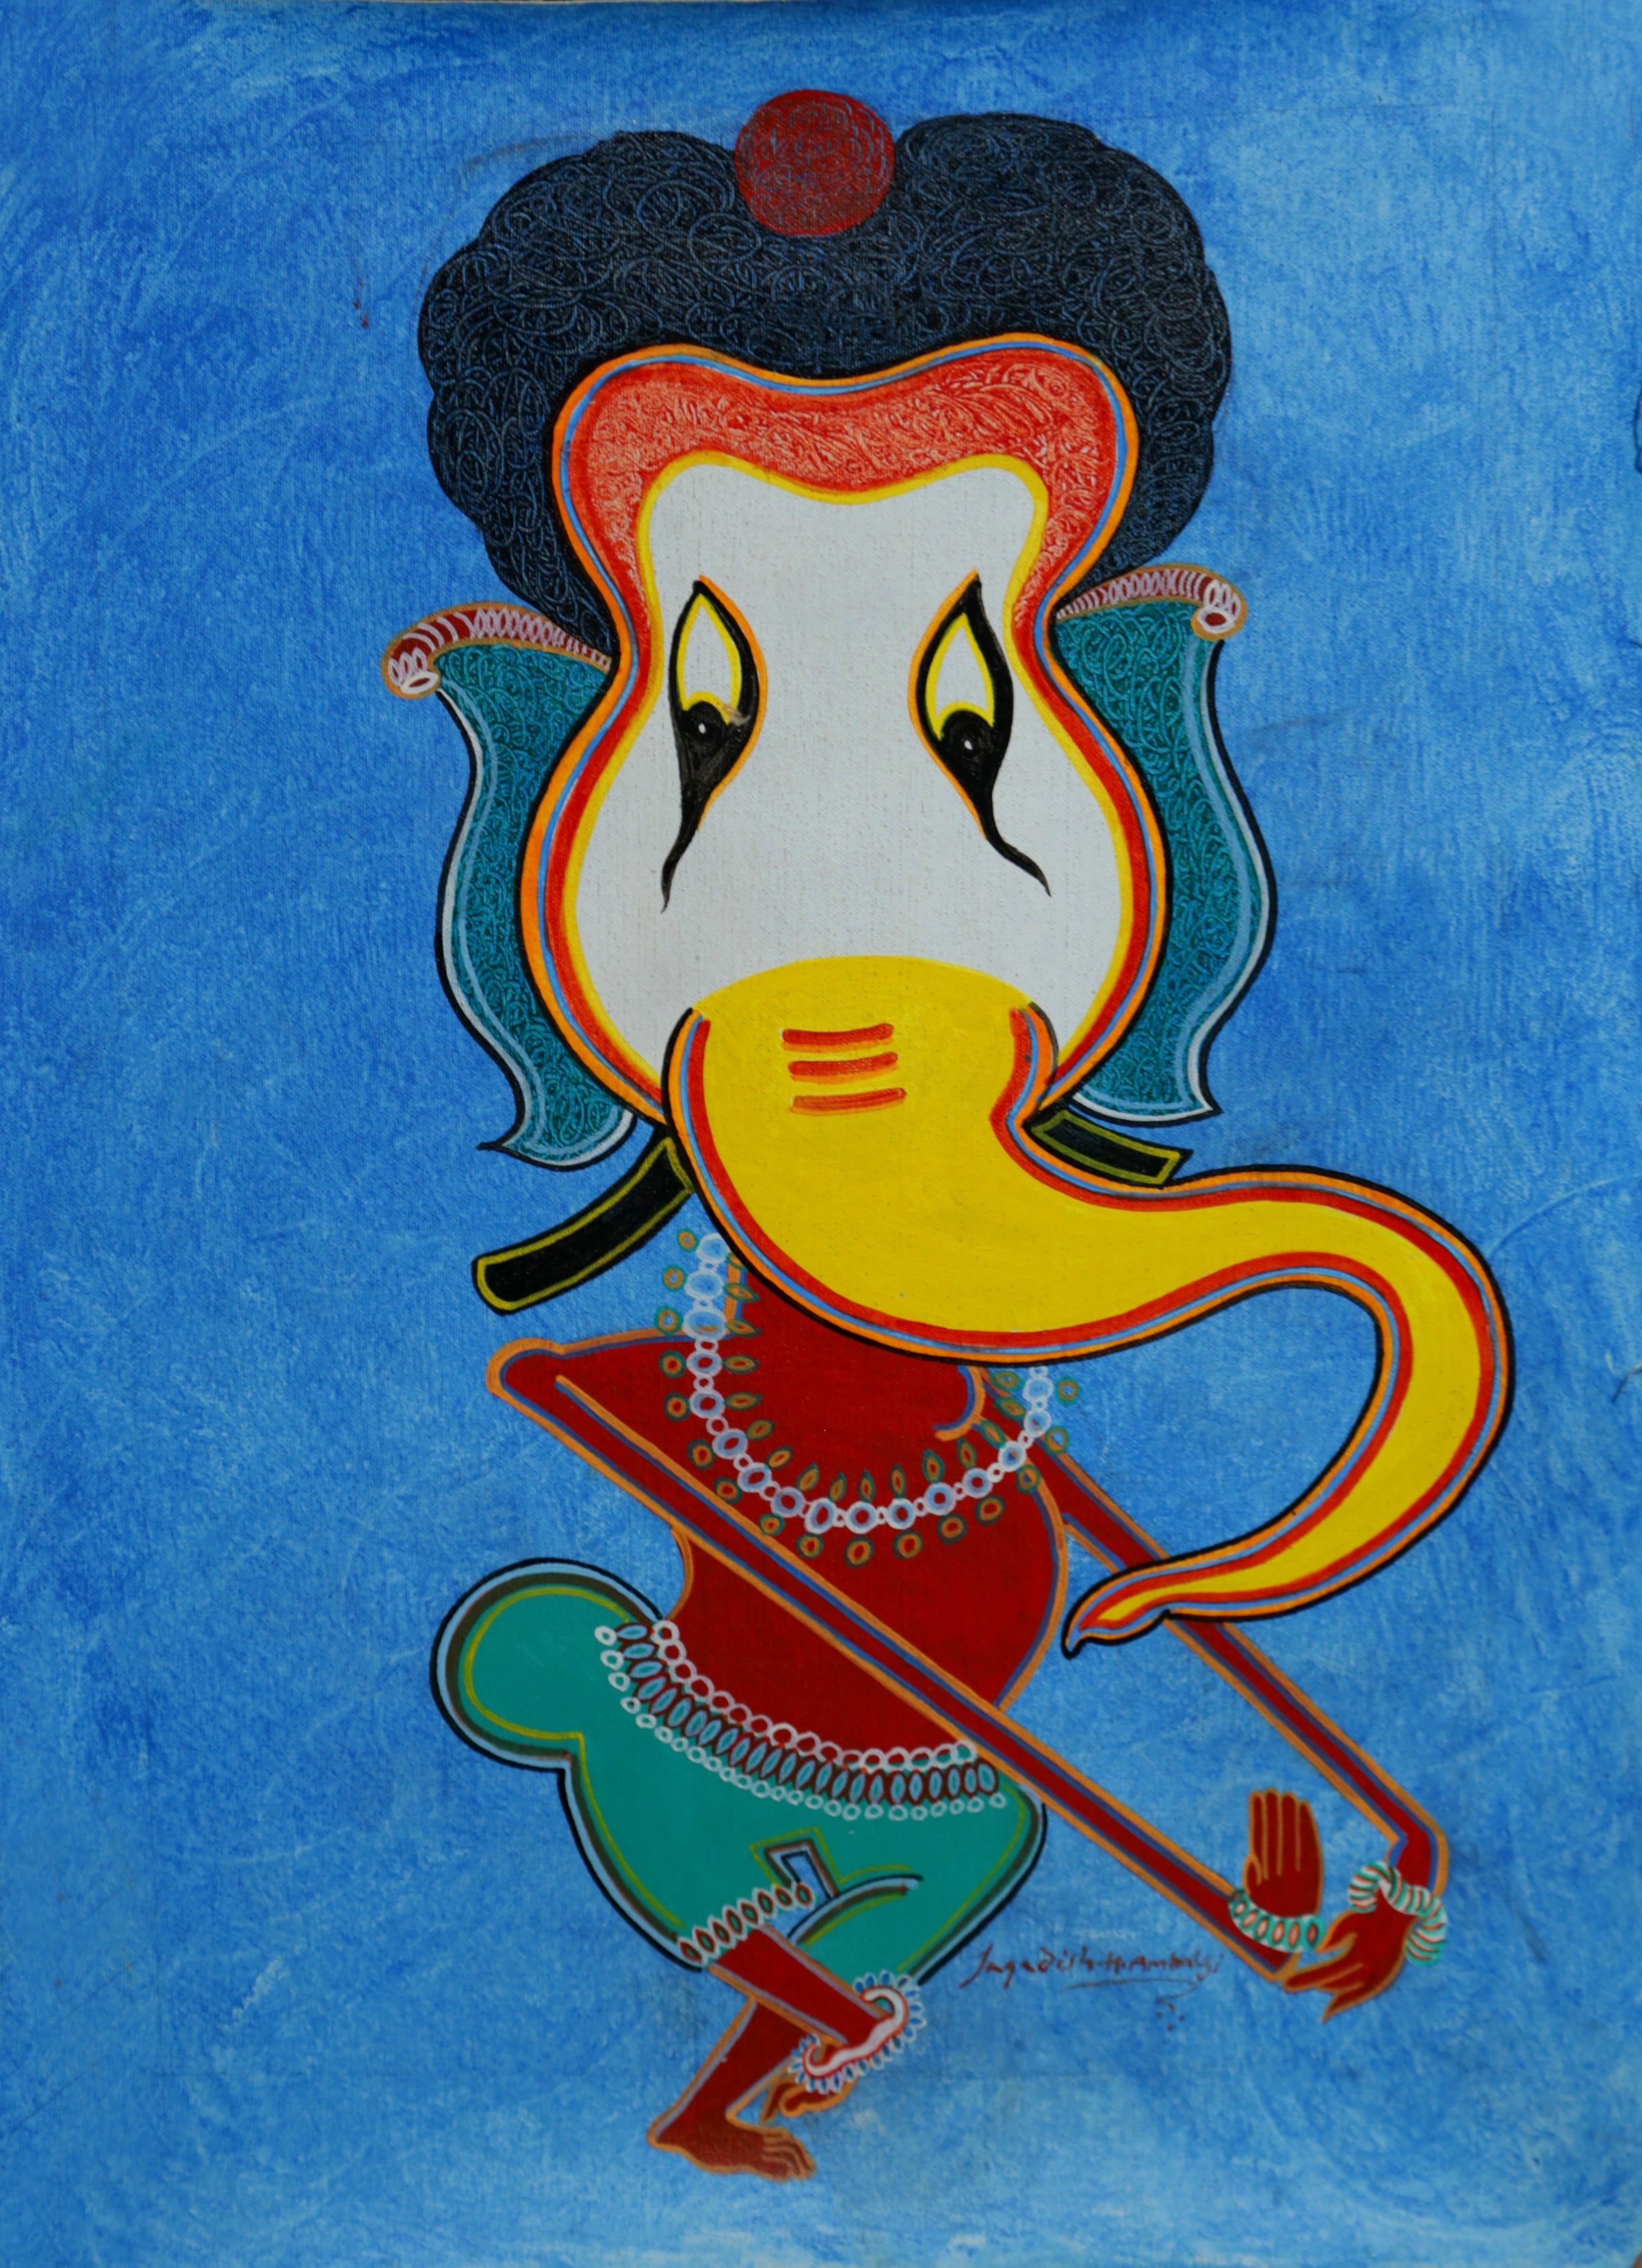 DANCING GANESHA - FOLK ART by Jagadish Ambalgi | Acrylic painting - Indian folk painting